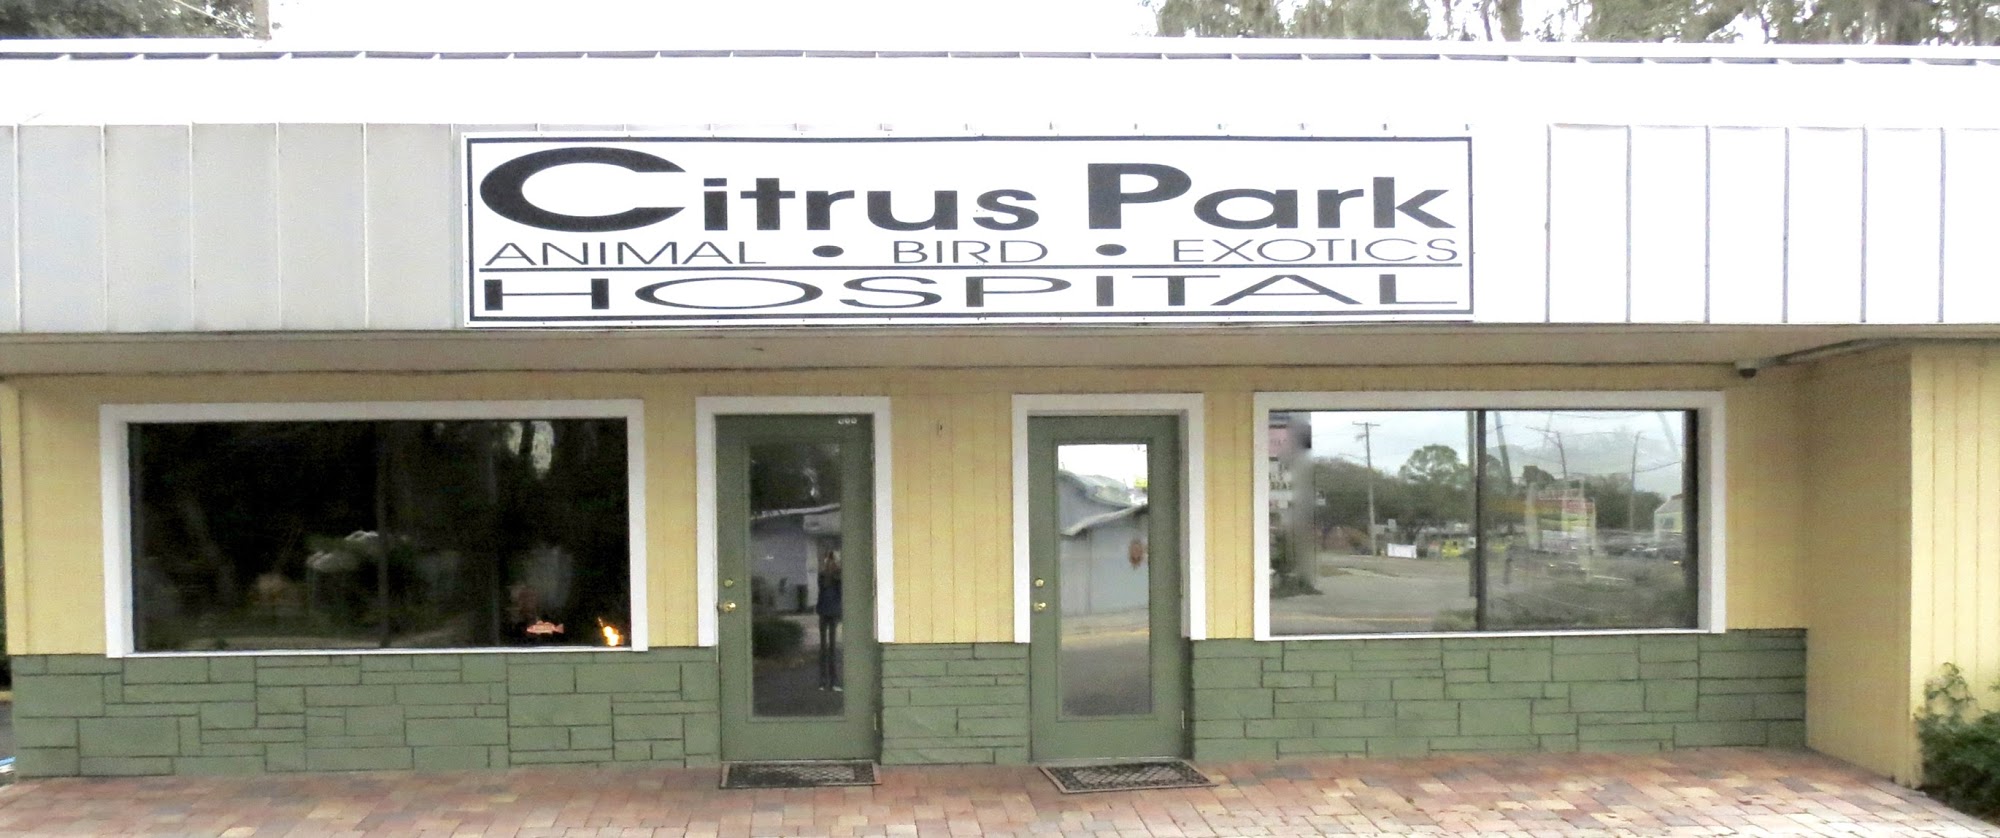 Citrus Park Animal, Bird & Exotics Hospital